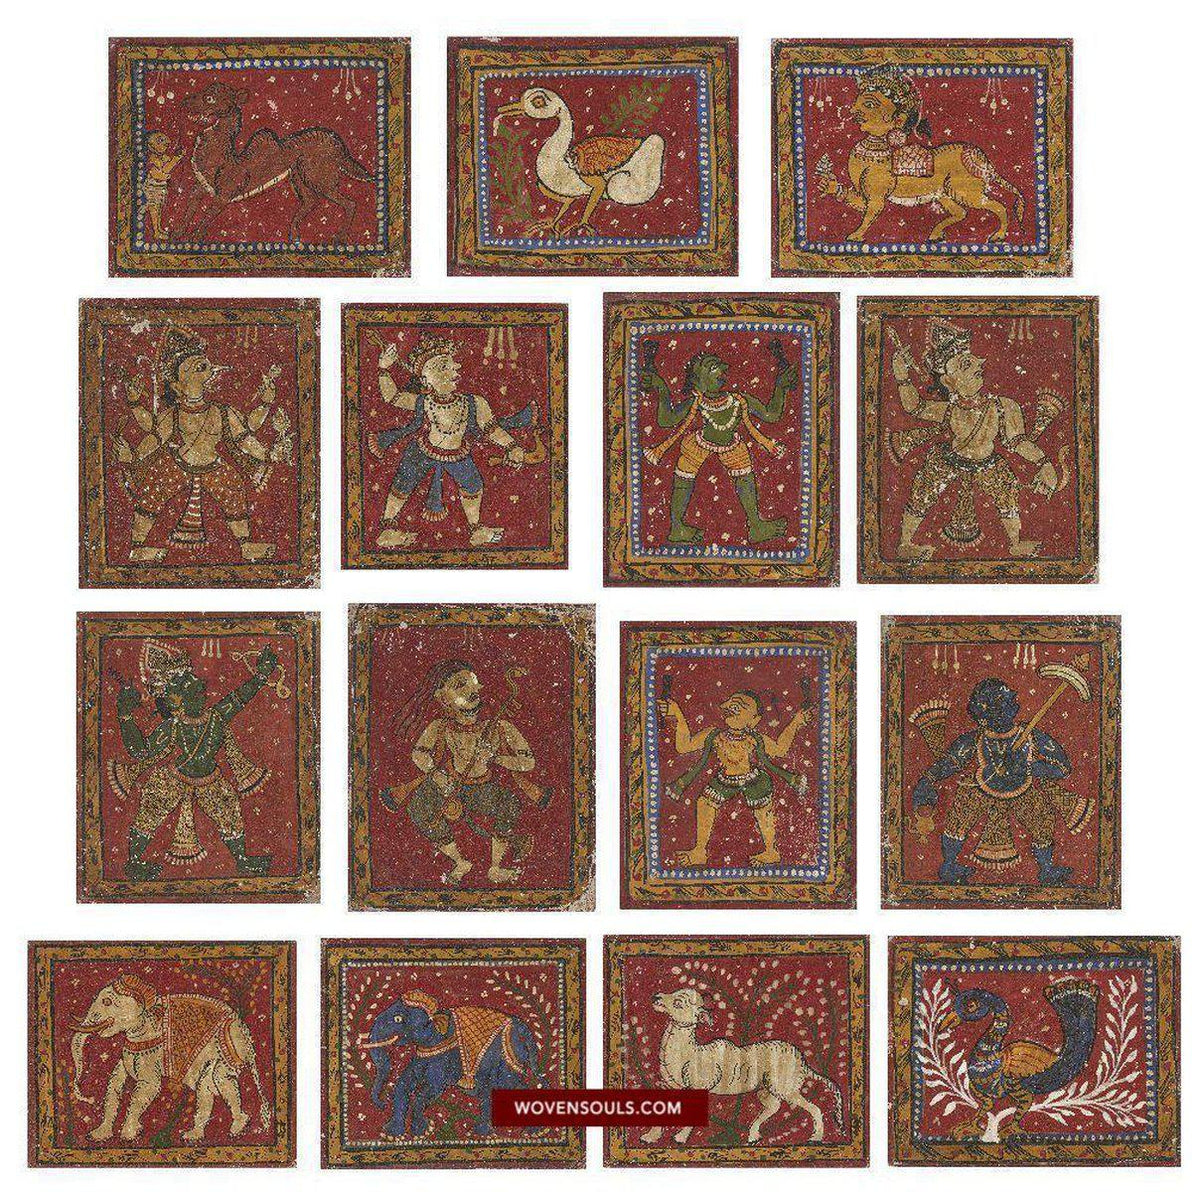 1523 old puri patta jatri patti indian art painting rare set of 15